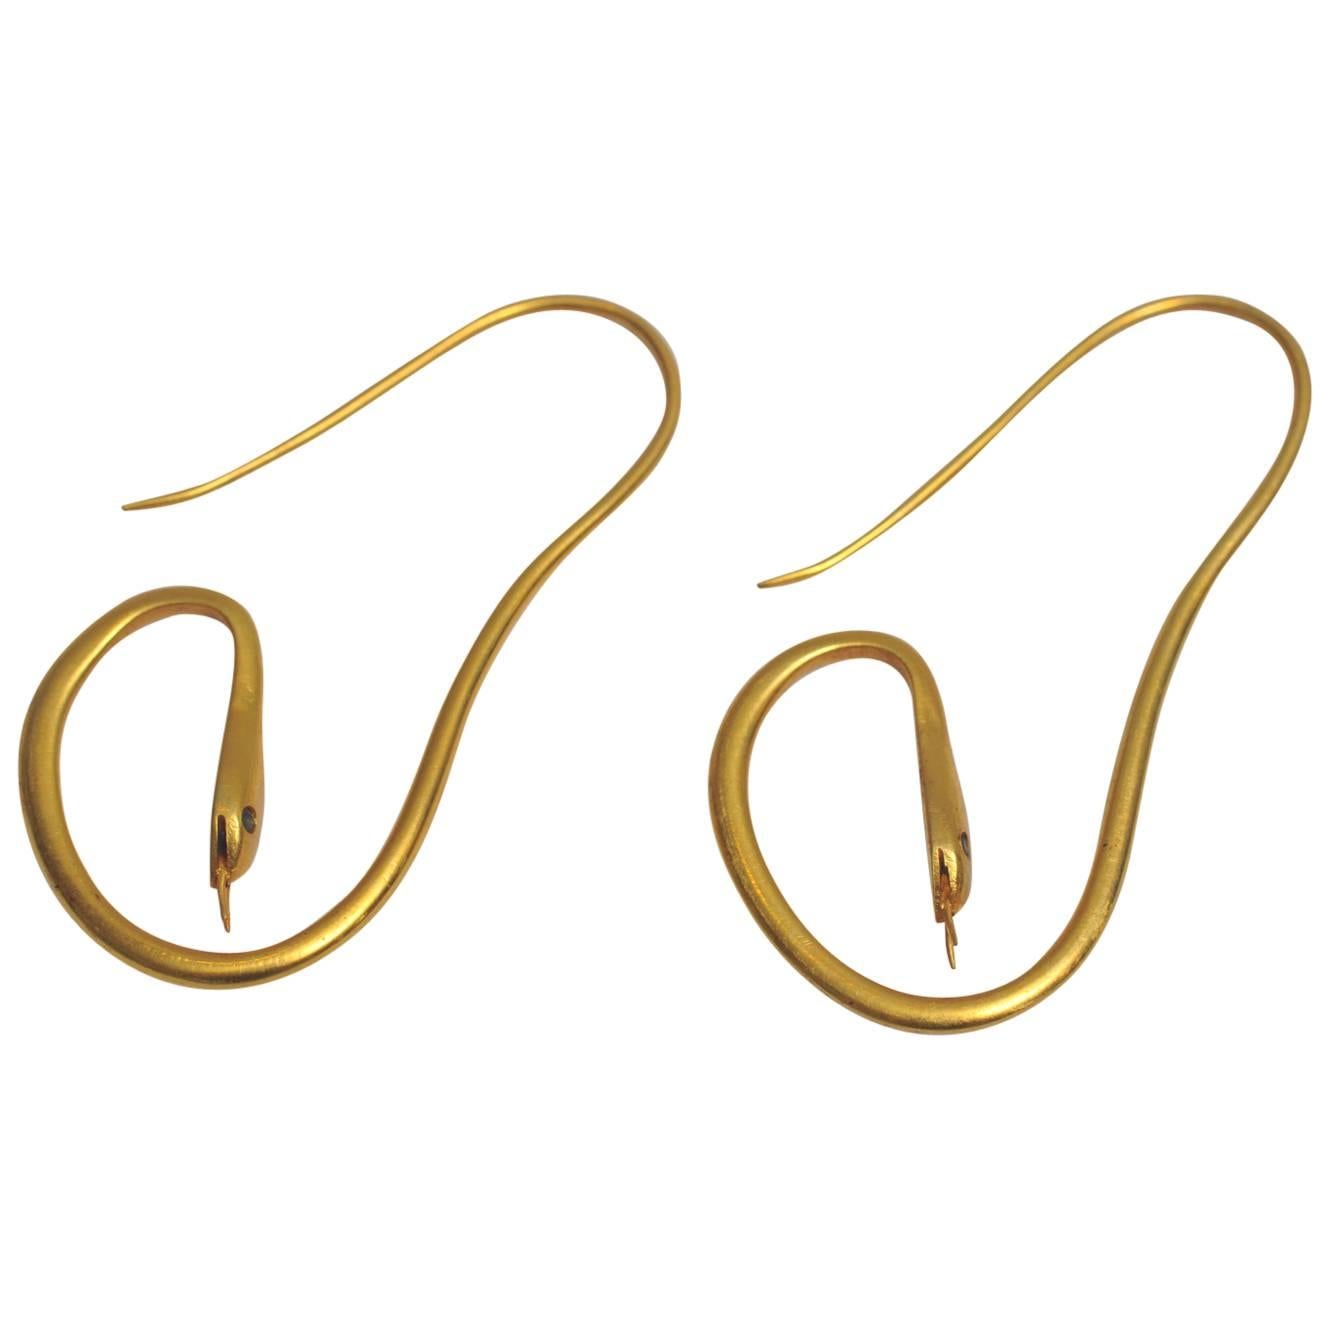 22 Karat Gold Snake Earrings with Sapphire Eyes